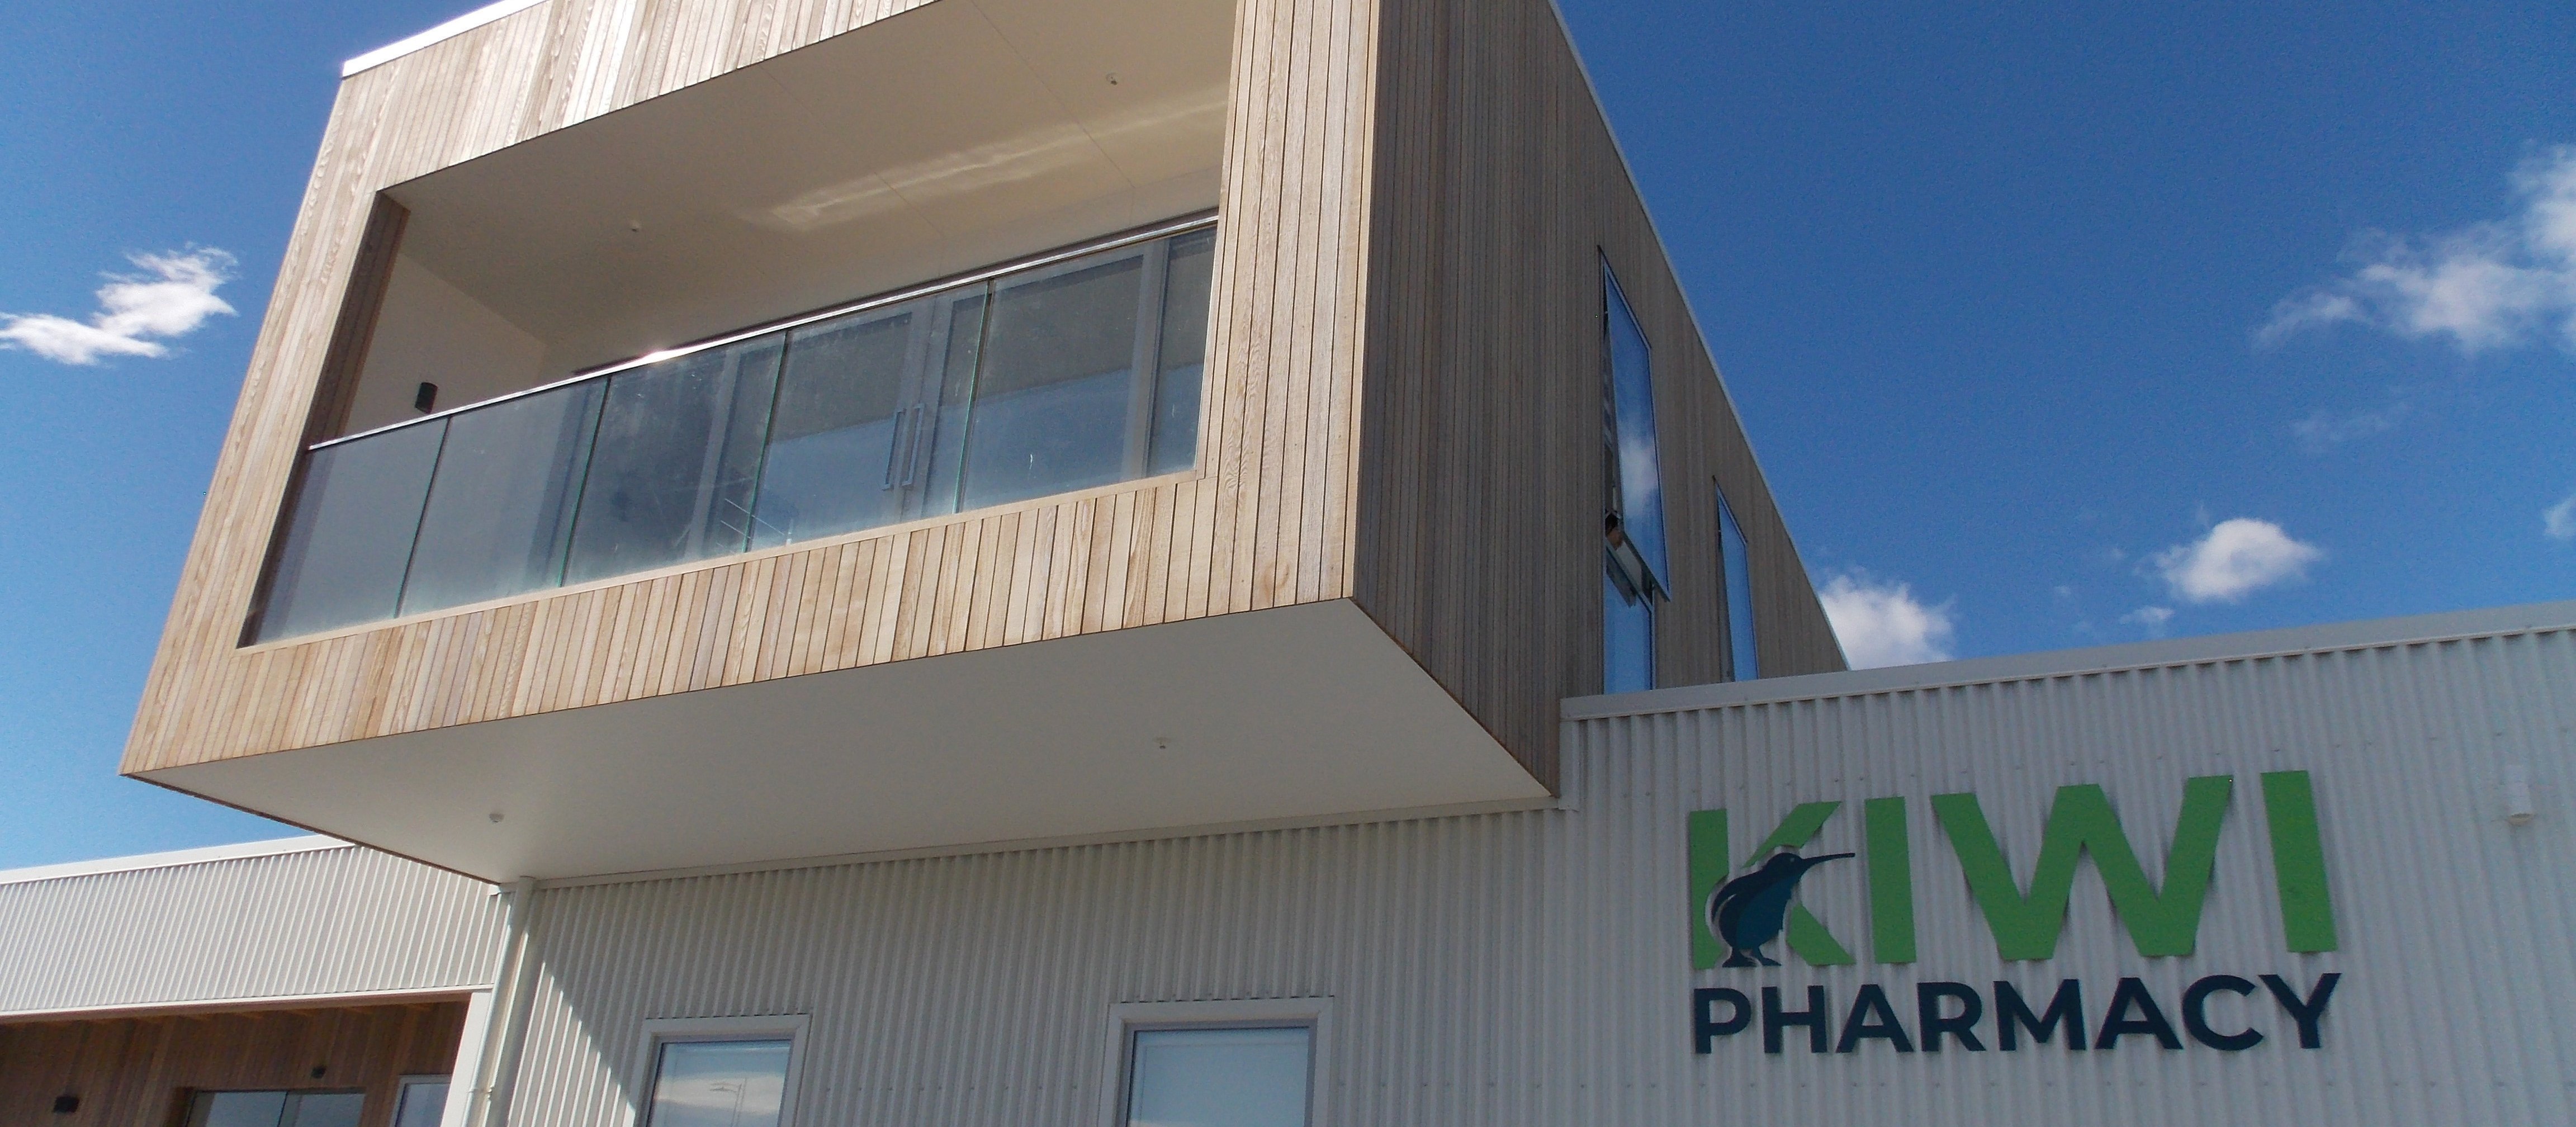 Kiwi Pharmacy in Yaldhurst, Christchurch opened in January